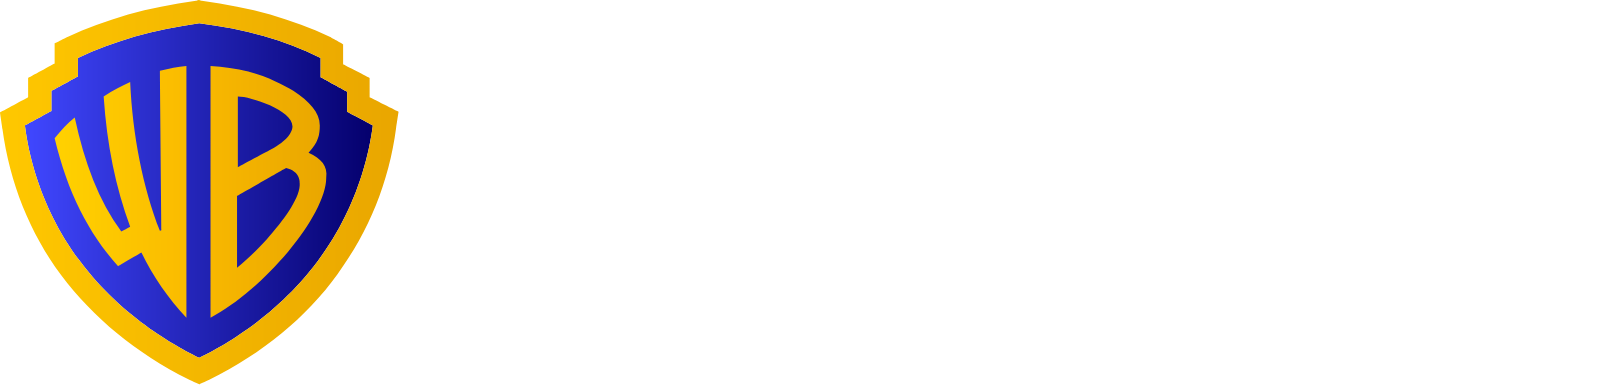 Warner Bros. Discovery logo large for dark backgrounds (transparent PNG)